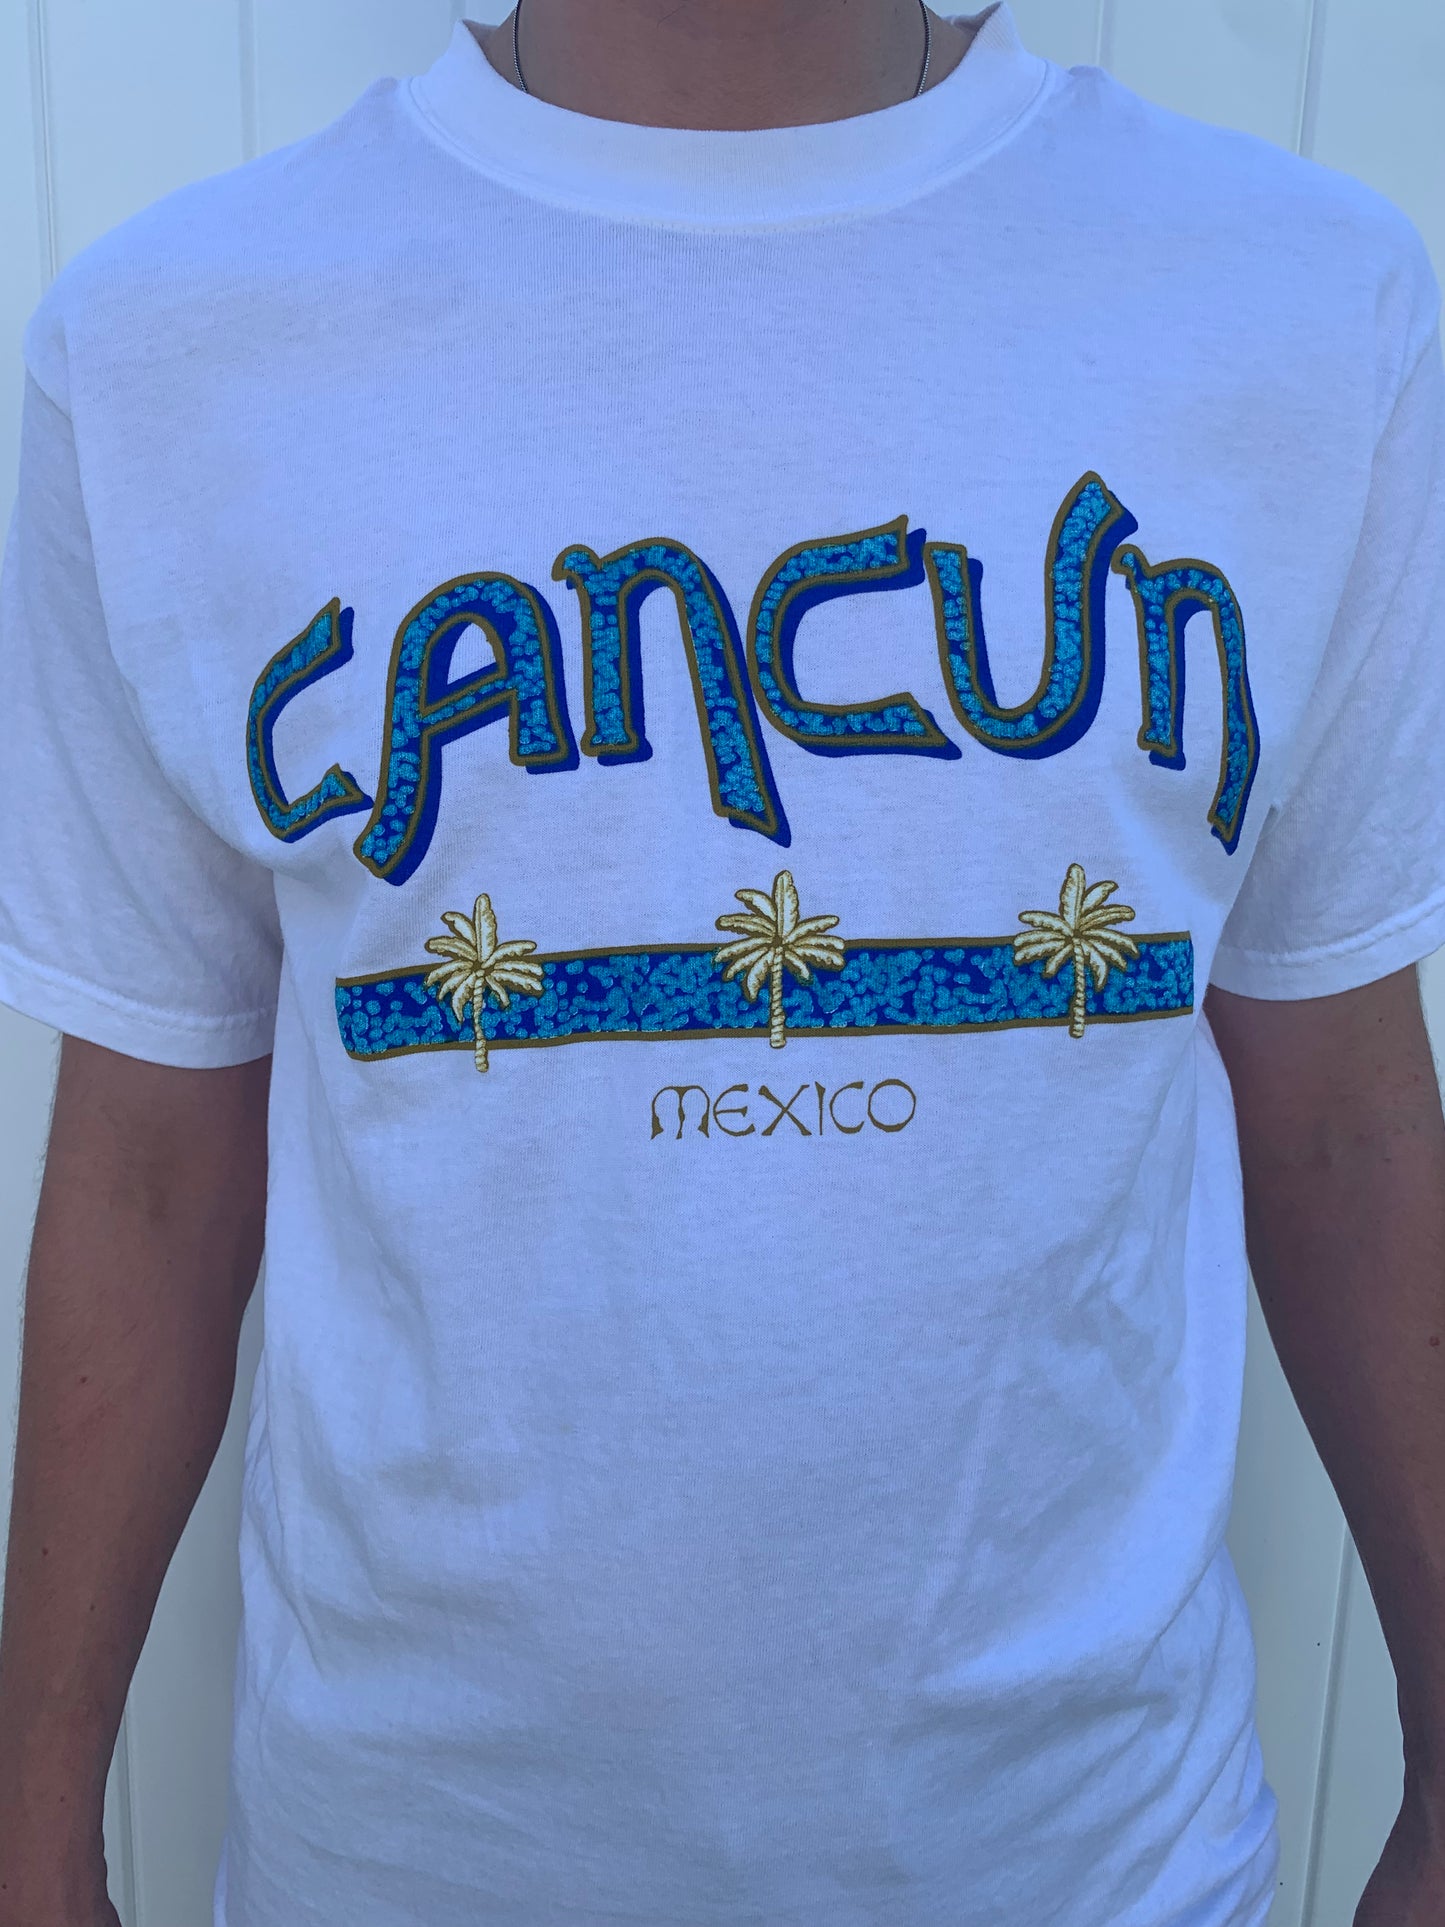 Cancun Mexico Tee